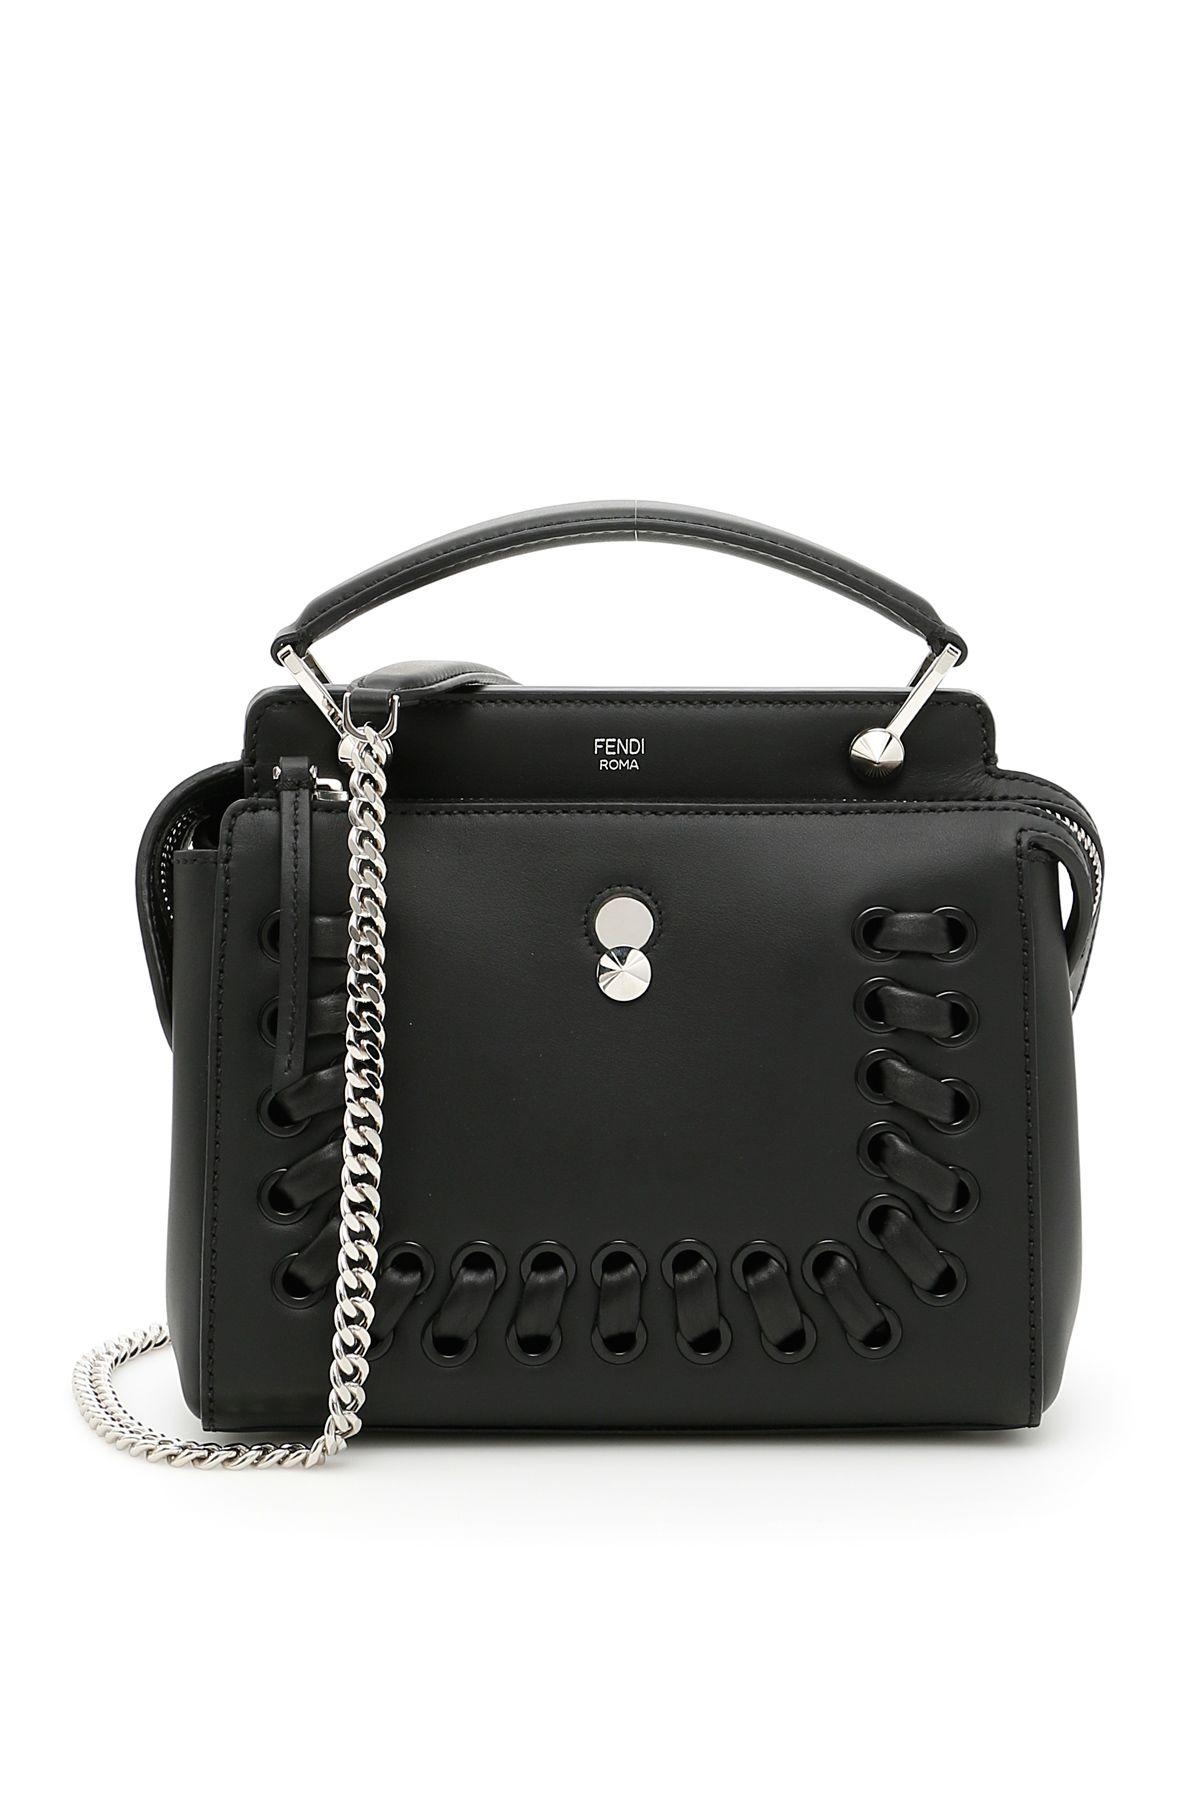 Fendi Dot Com Bag With Woven Details In Nero+palladionero | ModeSens